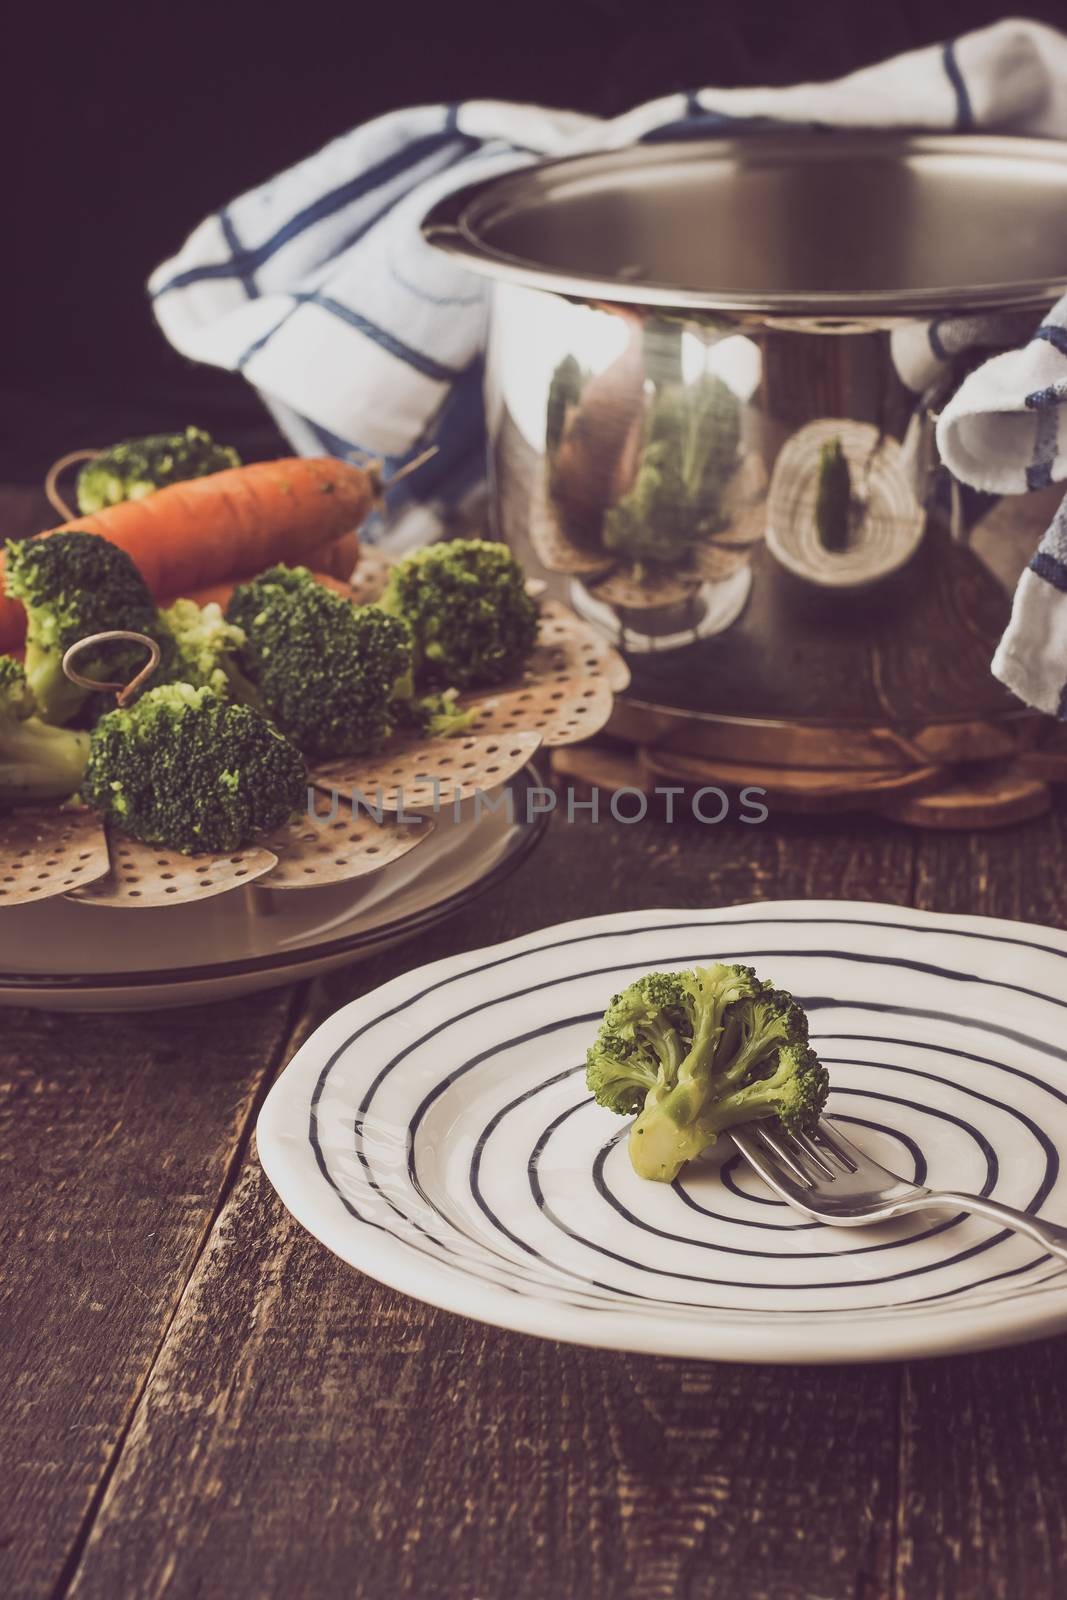 Steamed vegetables with broccoli on a fork by Deniskarpenkov